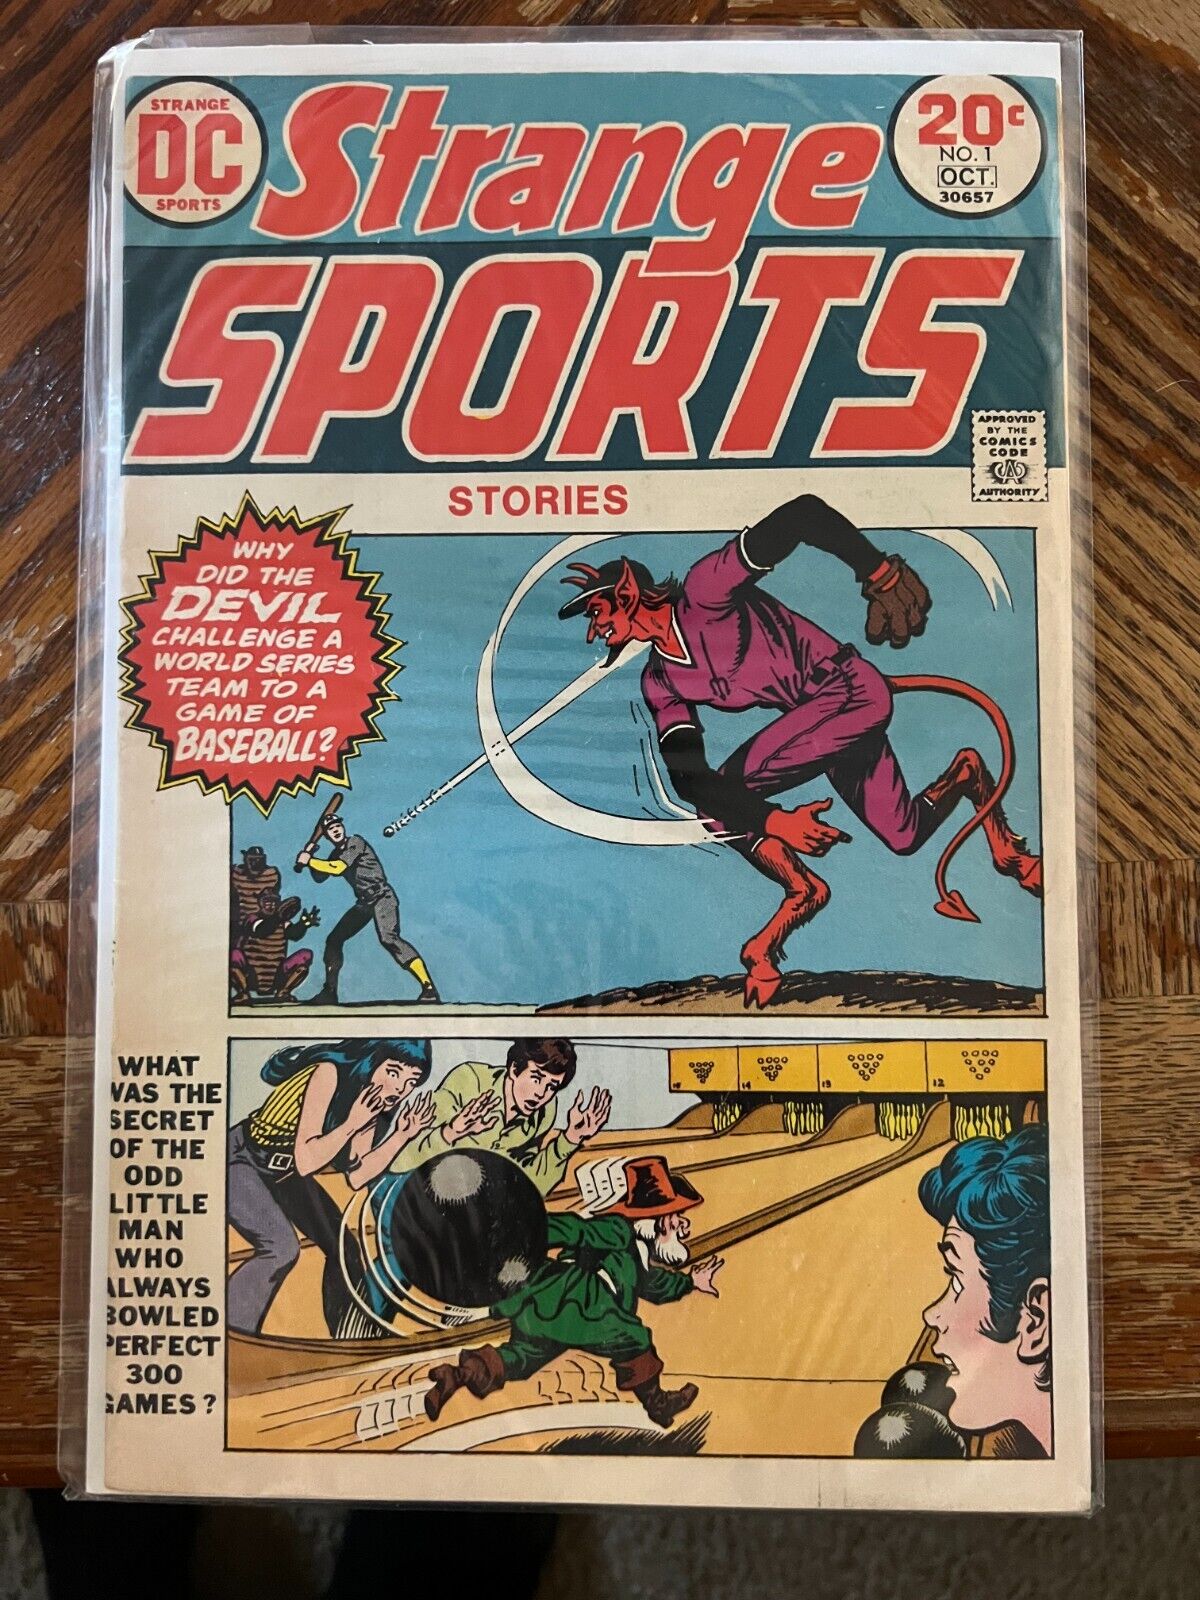 Strange Sports Stories #1 DC Comics ***